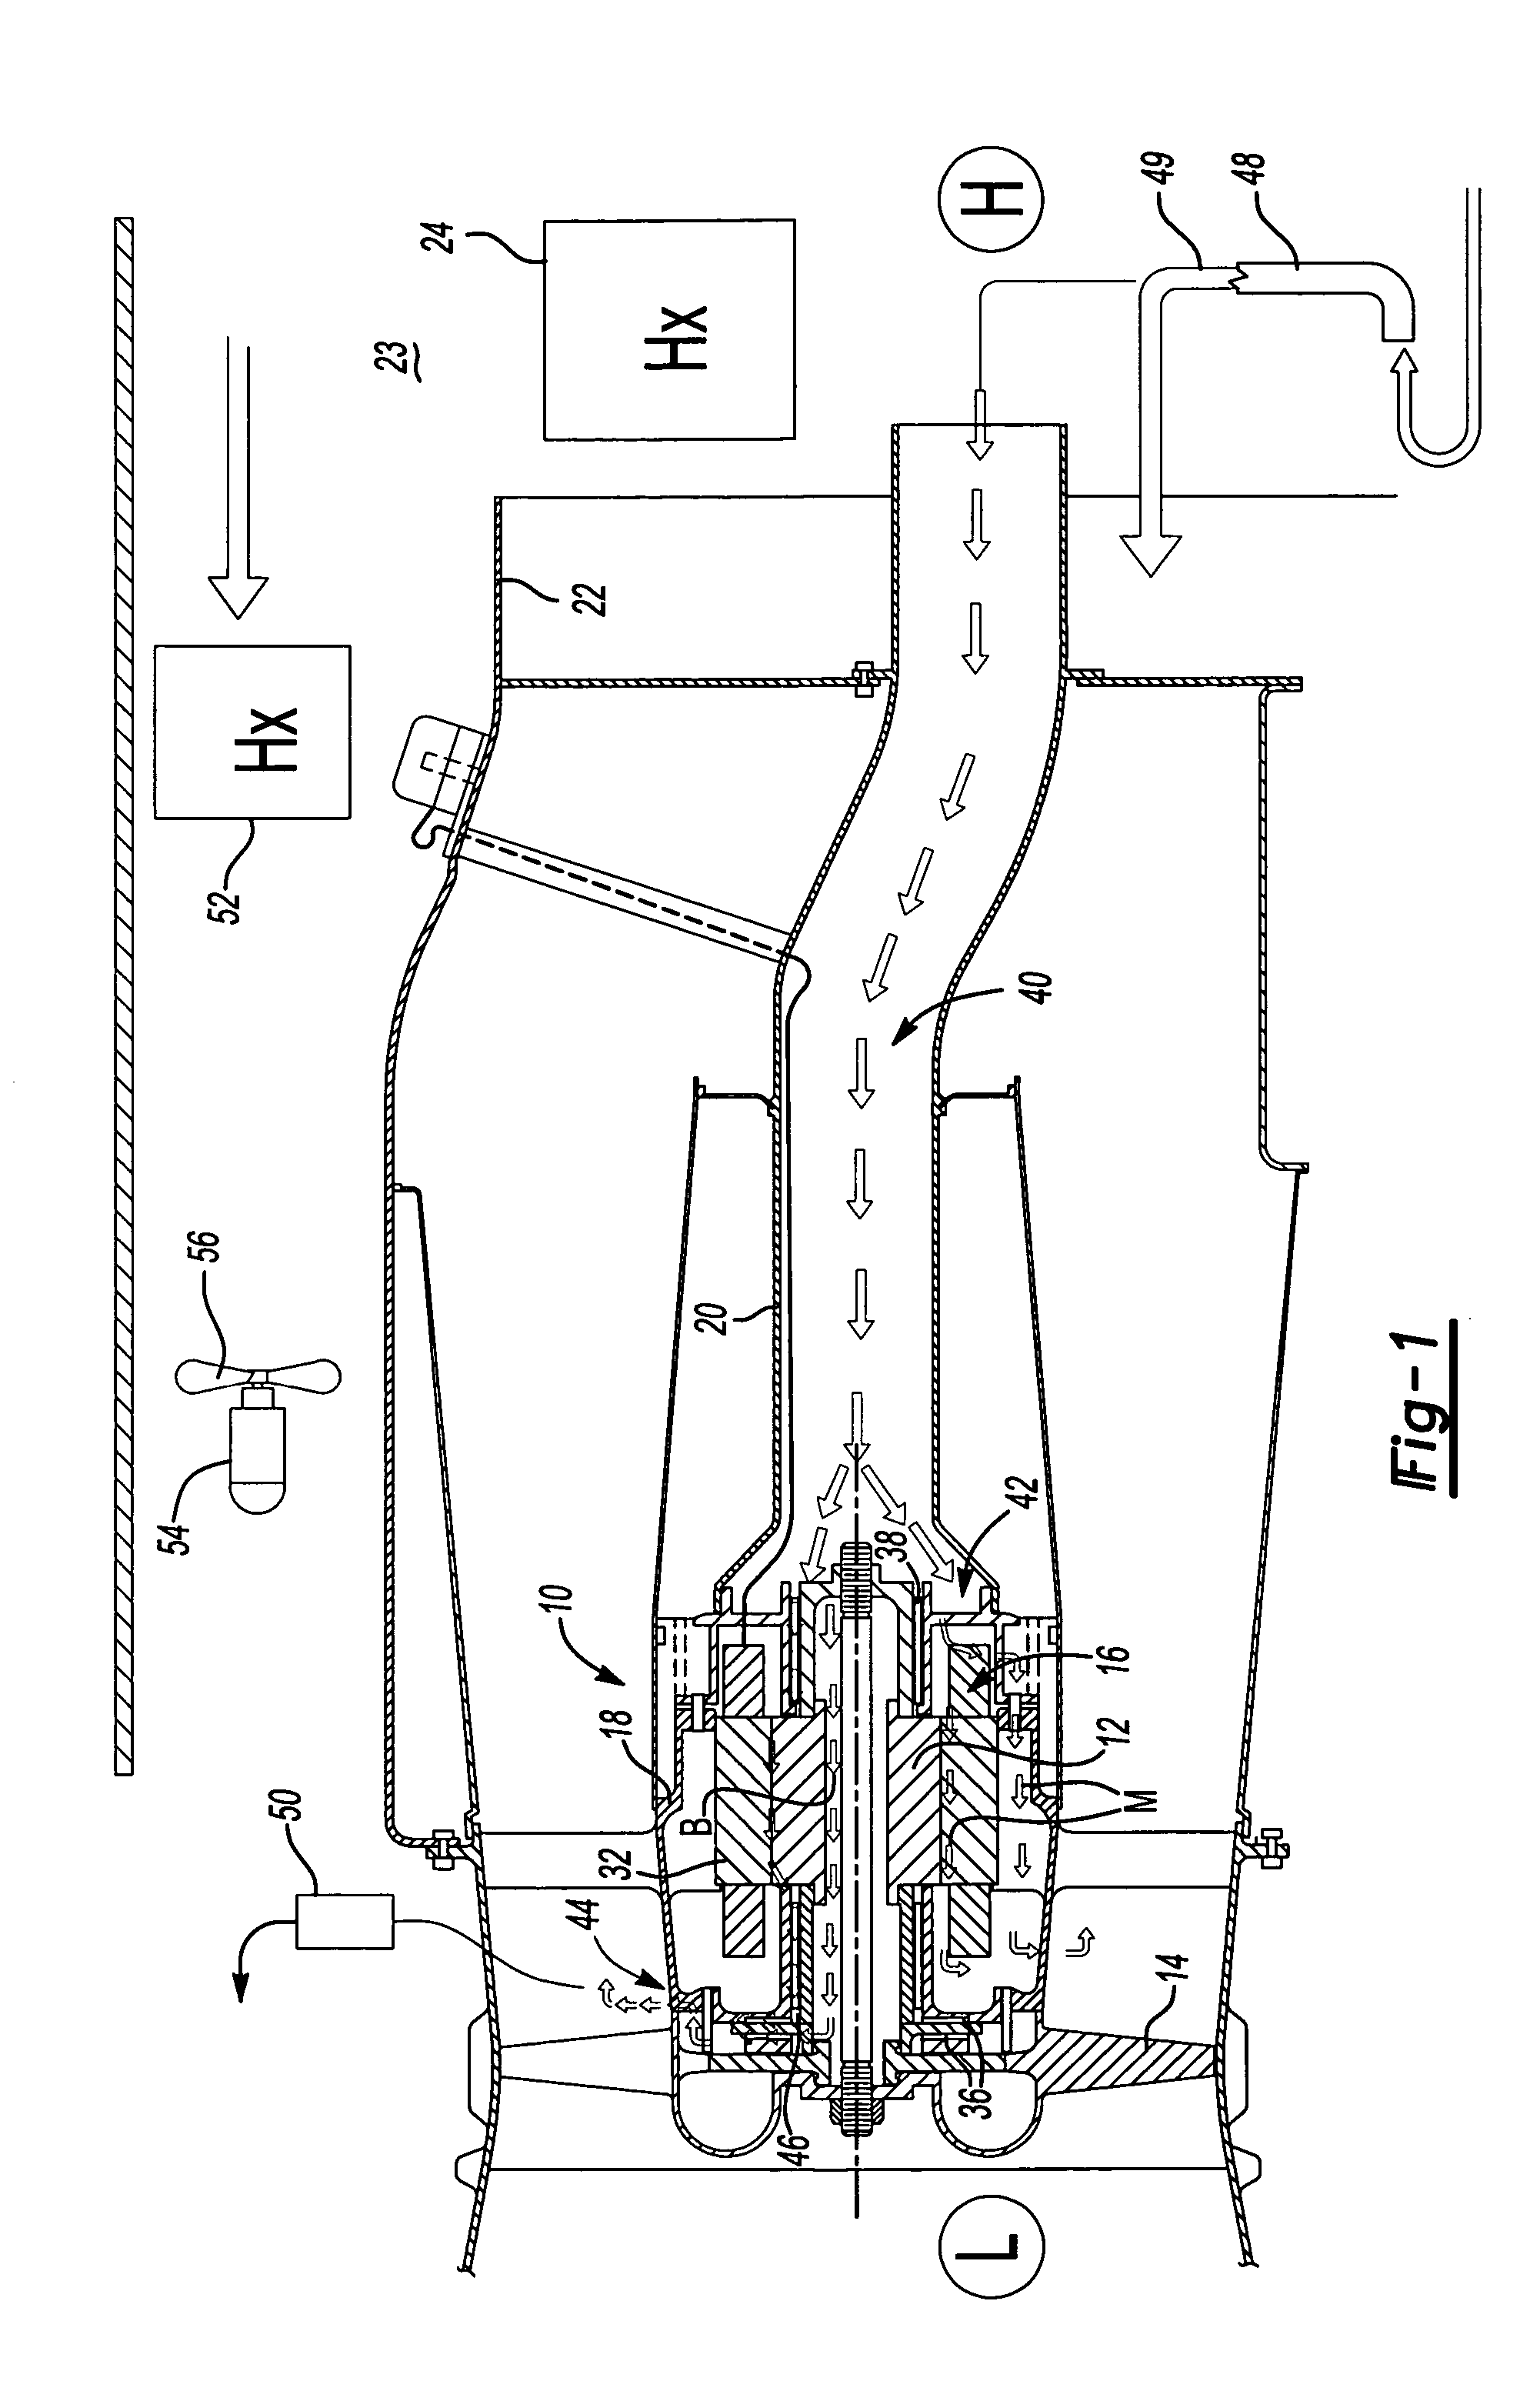 Integral motor and air bearing cooling path